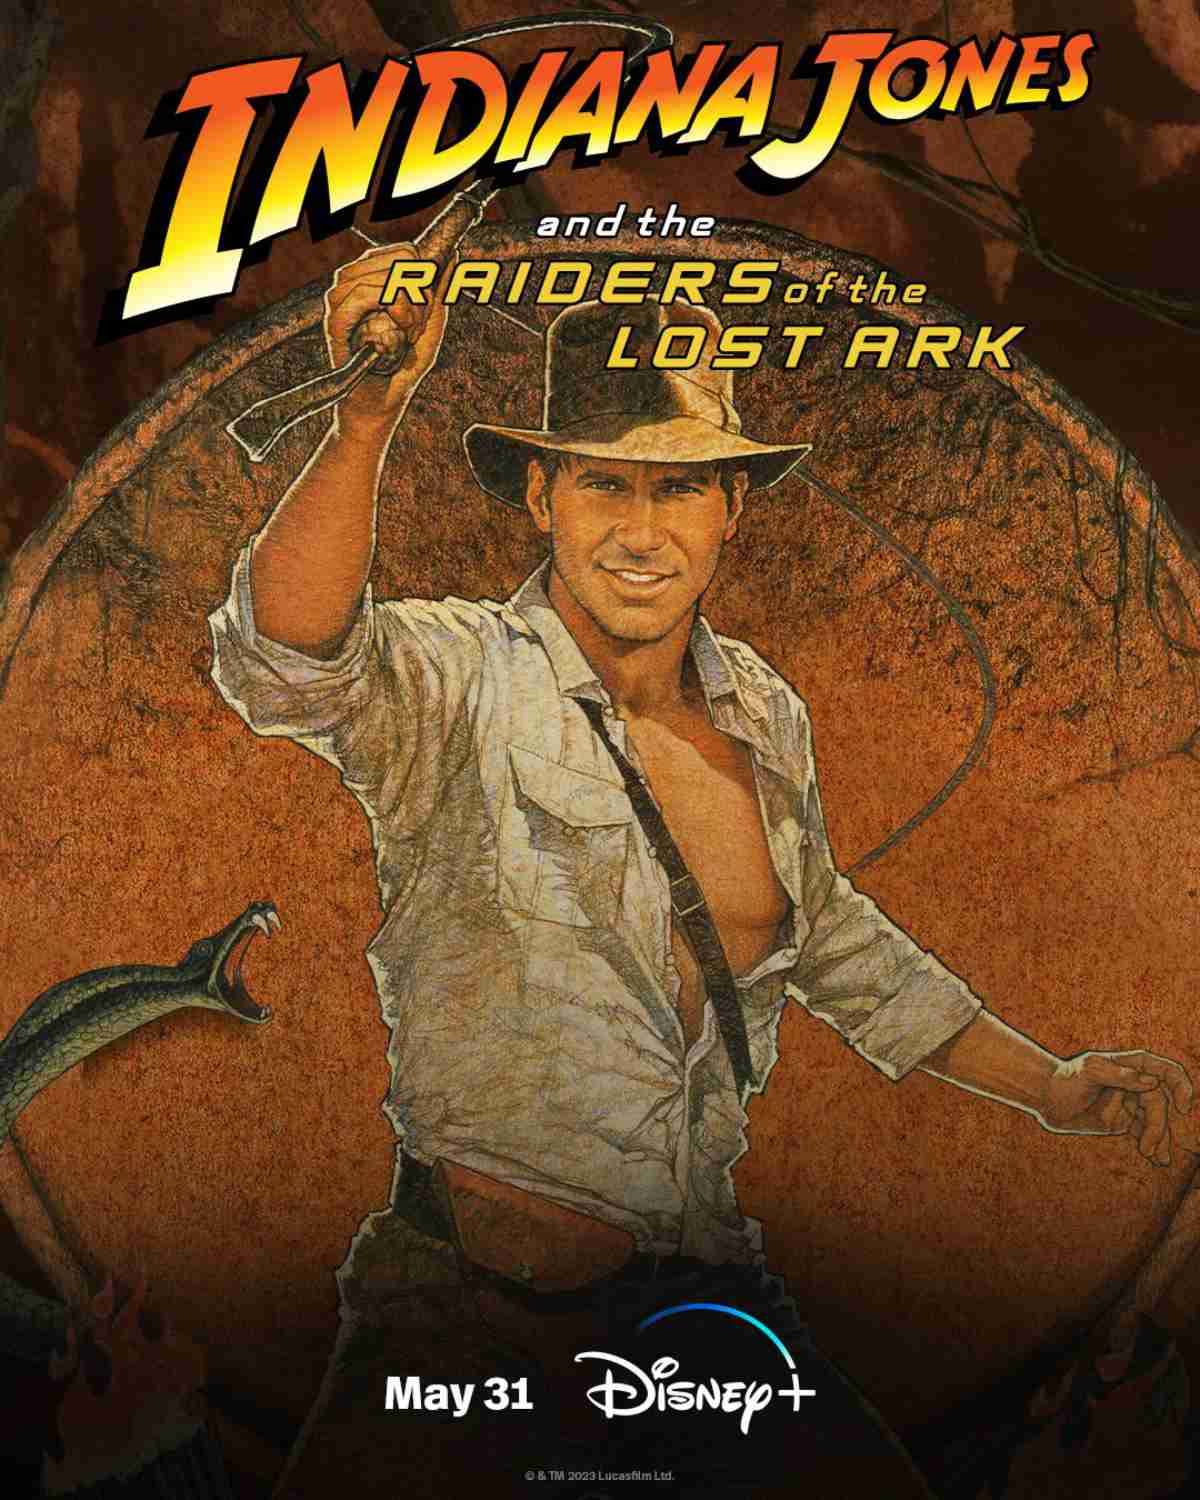 Indiana Jones Movies and Series to Stream on Disney+